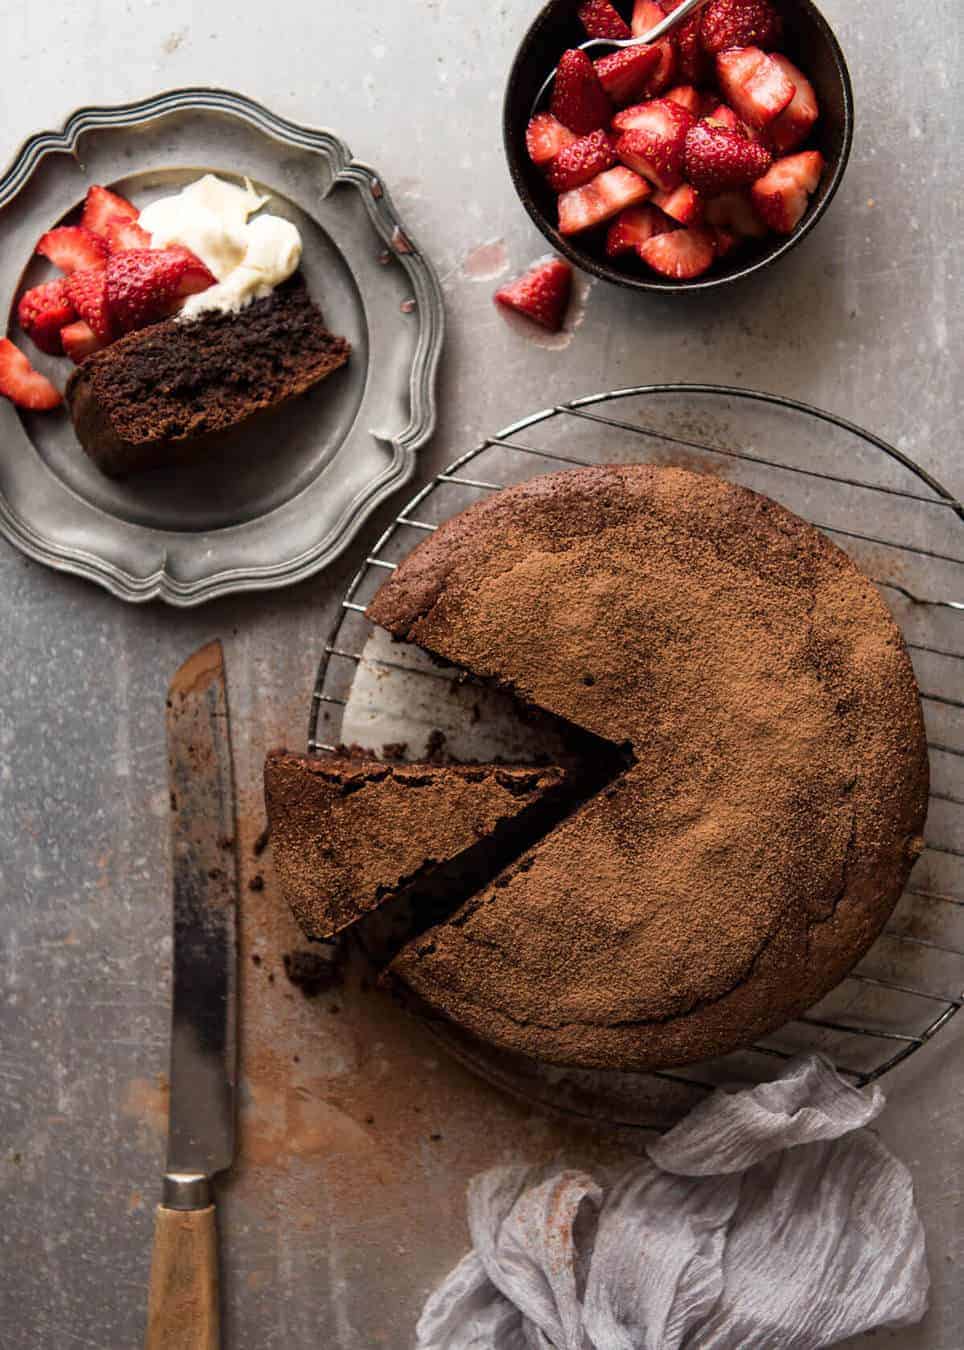 Flourless chocolate cake - Simply Delicious